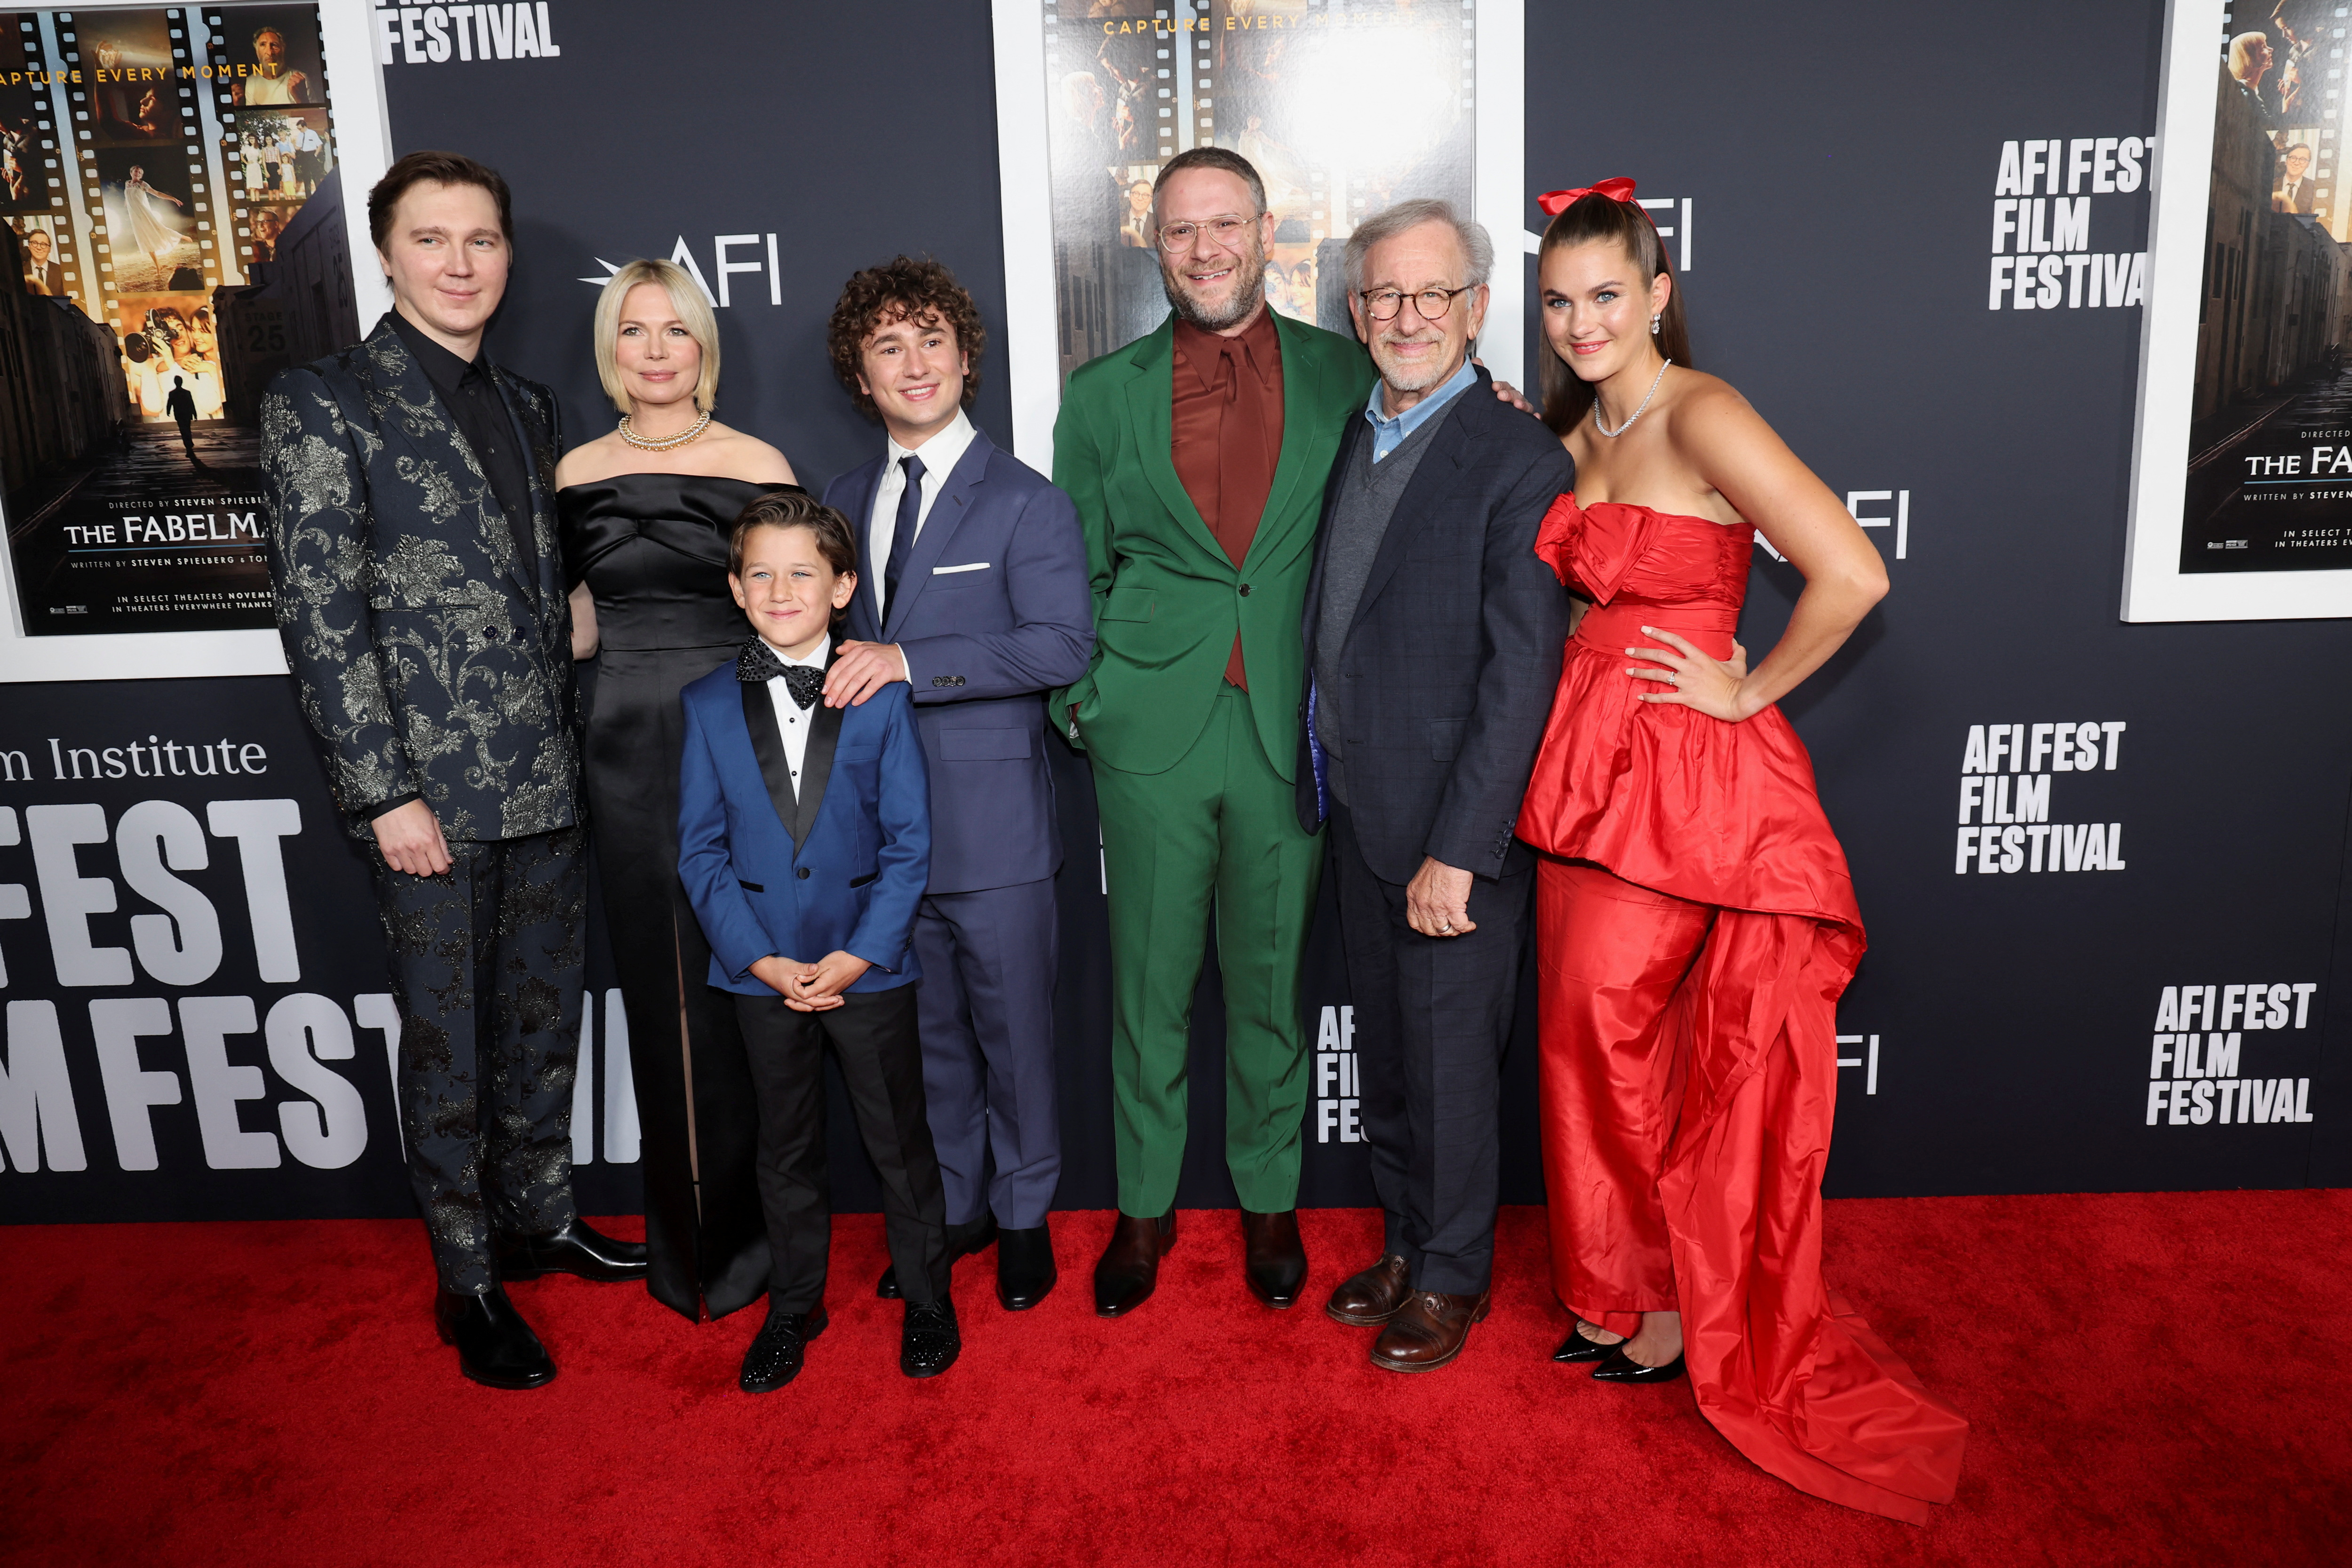 Cast, creators reveal how Steven Spielberg's life shaped 'The Fabelmans